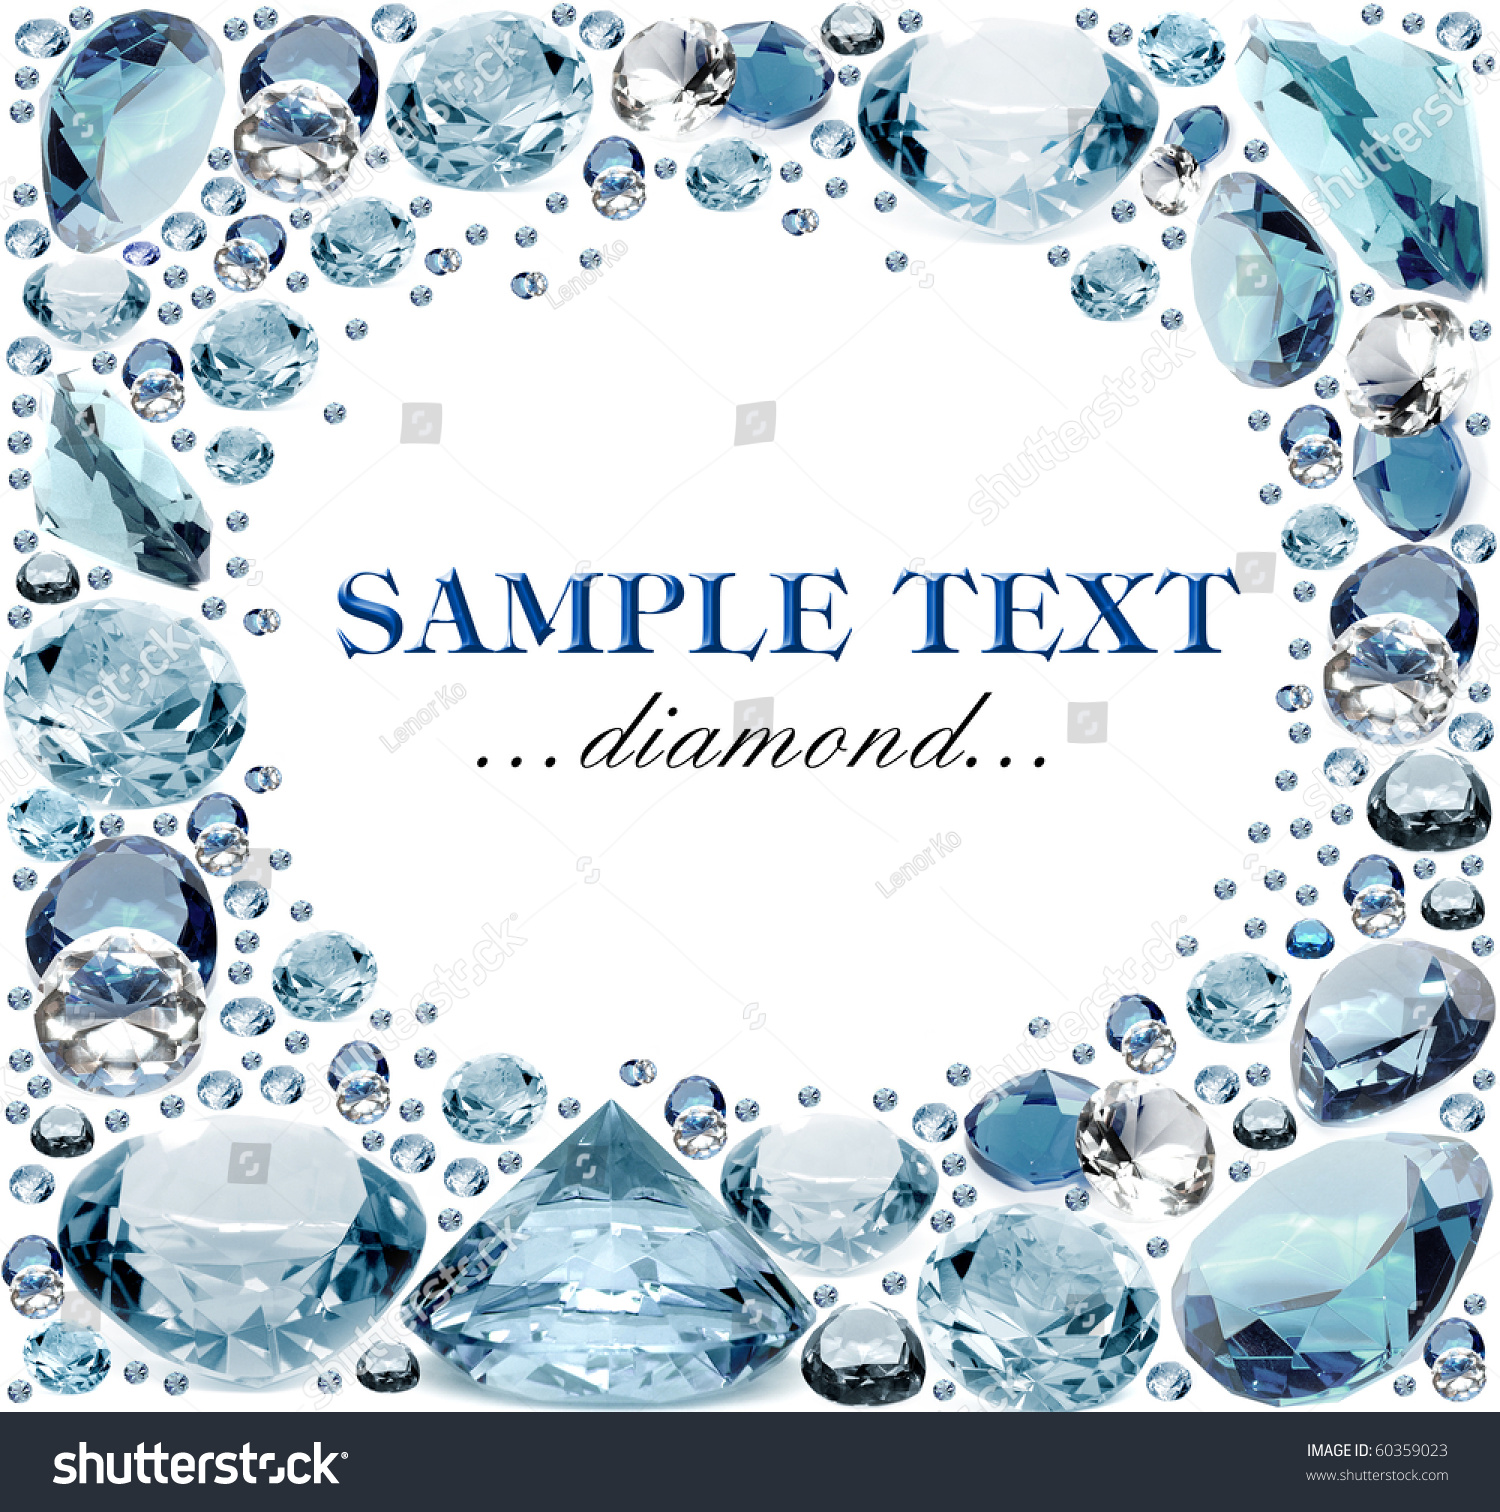 Diamond Frame Stock Photo 60359023 : Shutterstock